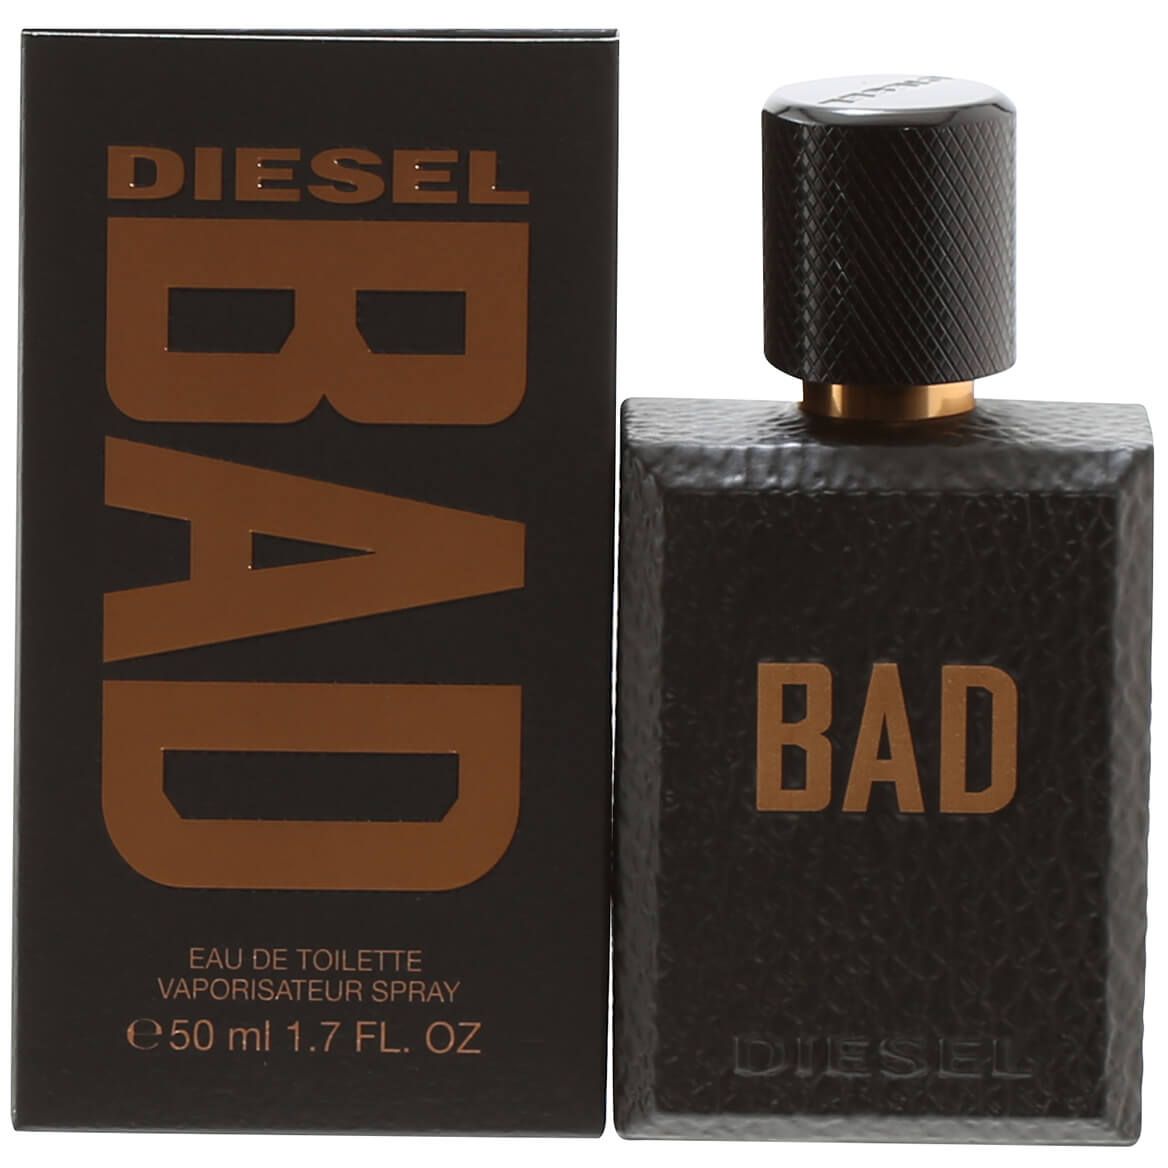 Diesel Bad for Men EDT, 1.7 fl. oz. + '-' + 377236